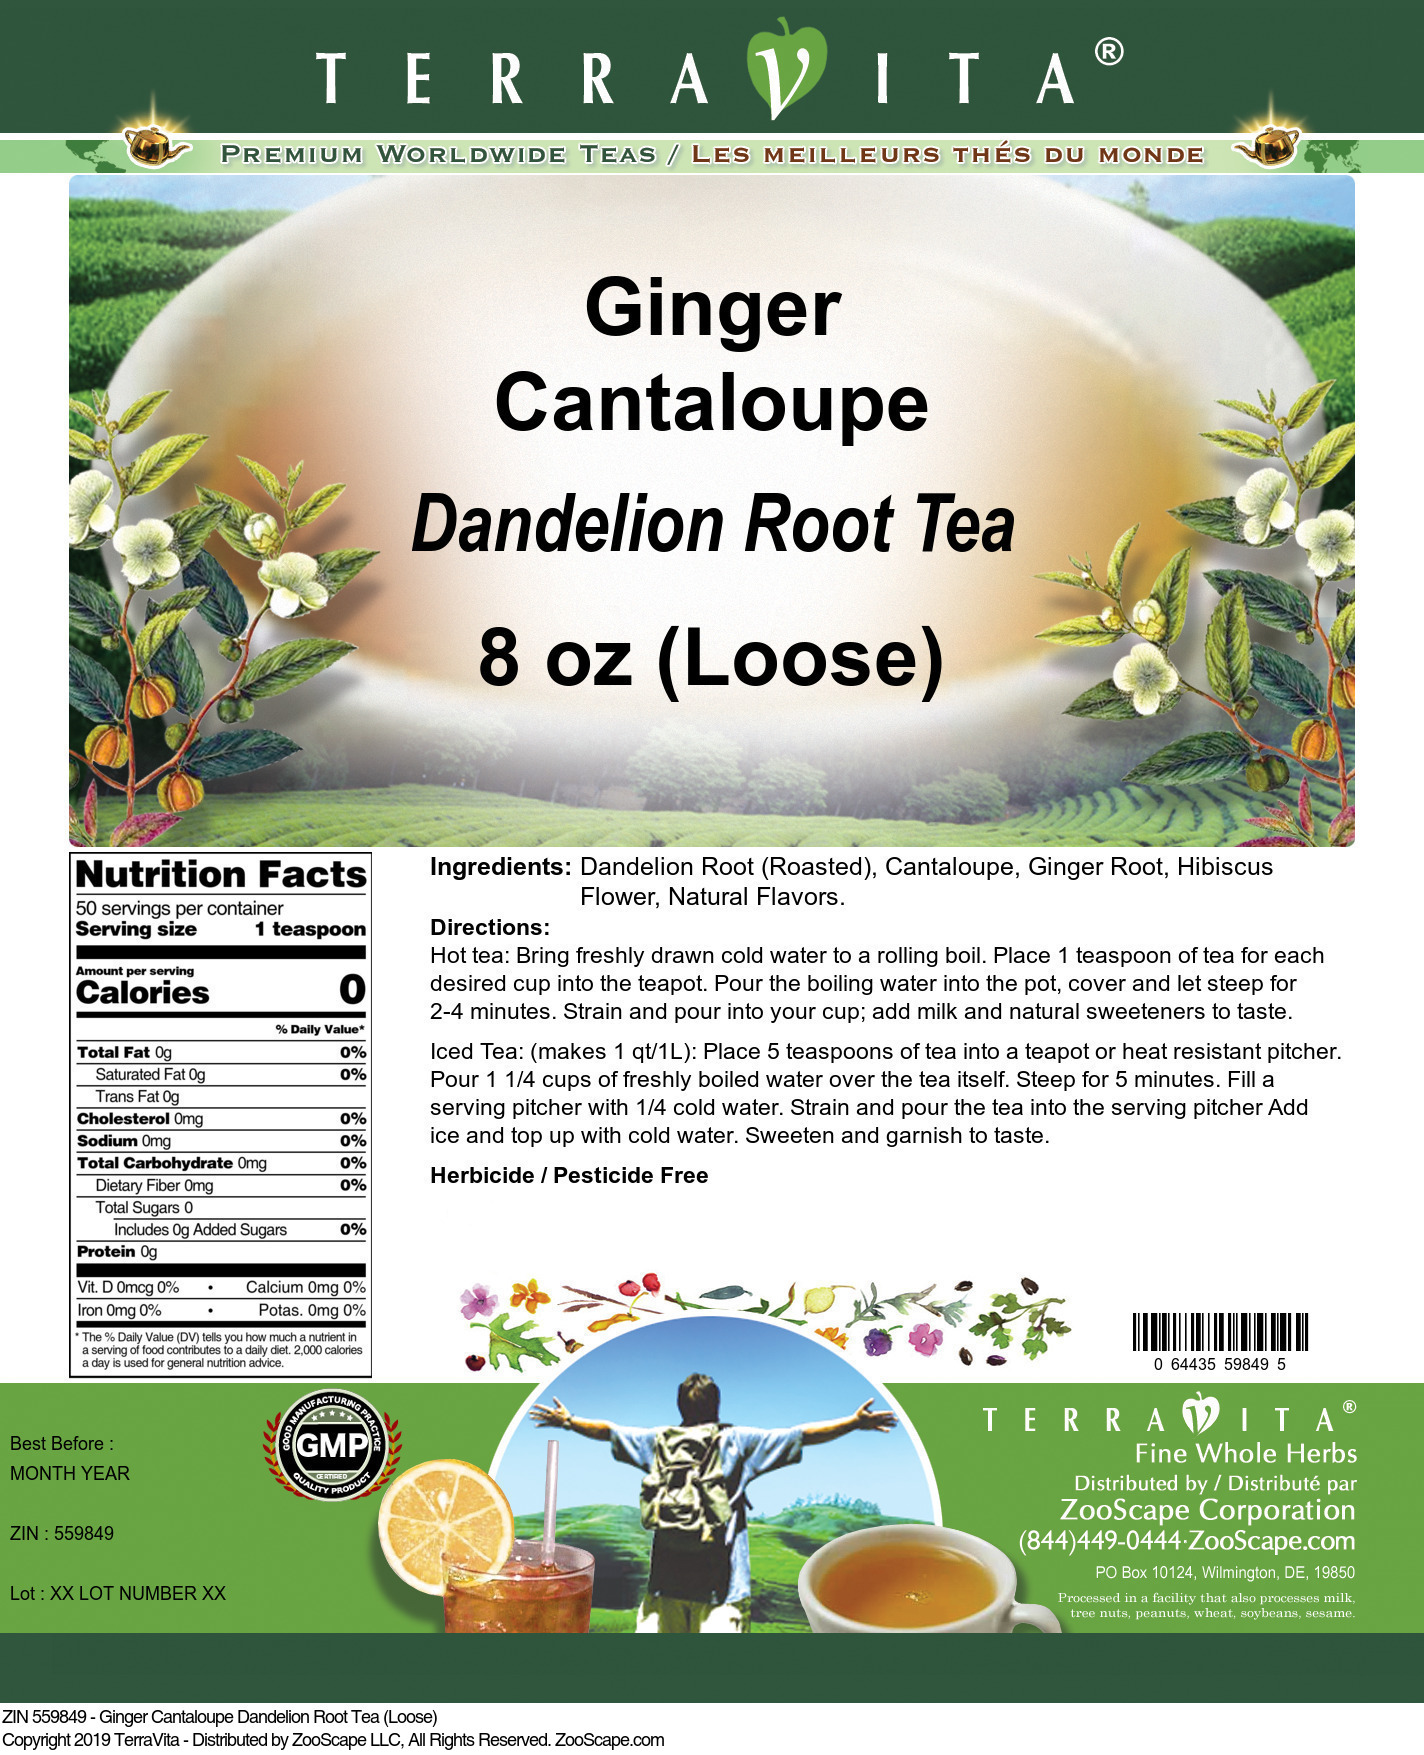 Ginger Cantaloupe Dandelion Root Tea (Loose) - Label